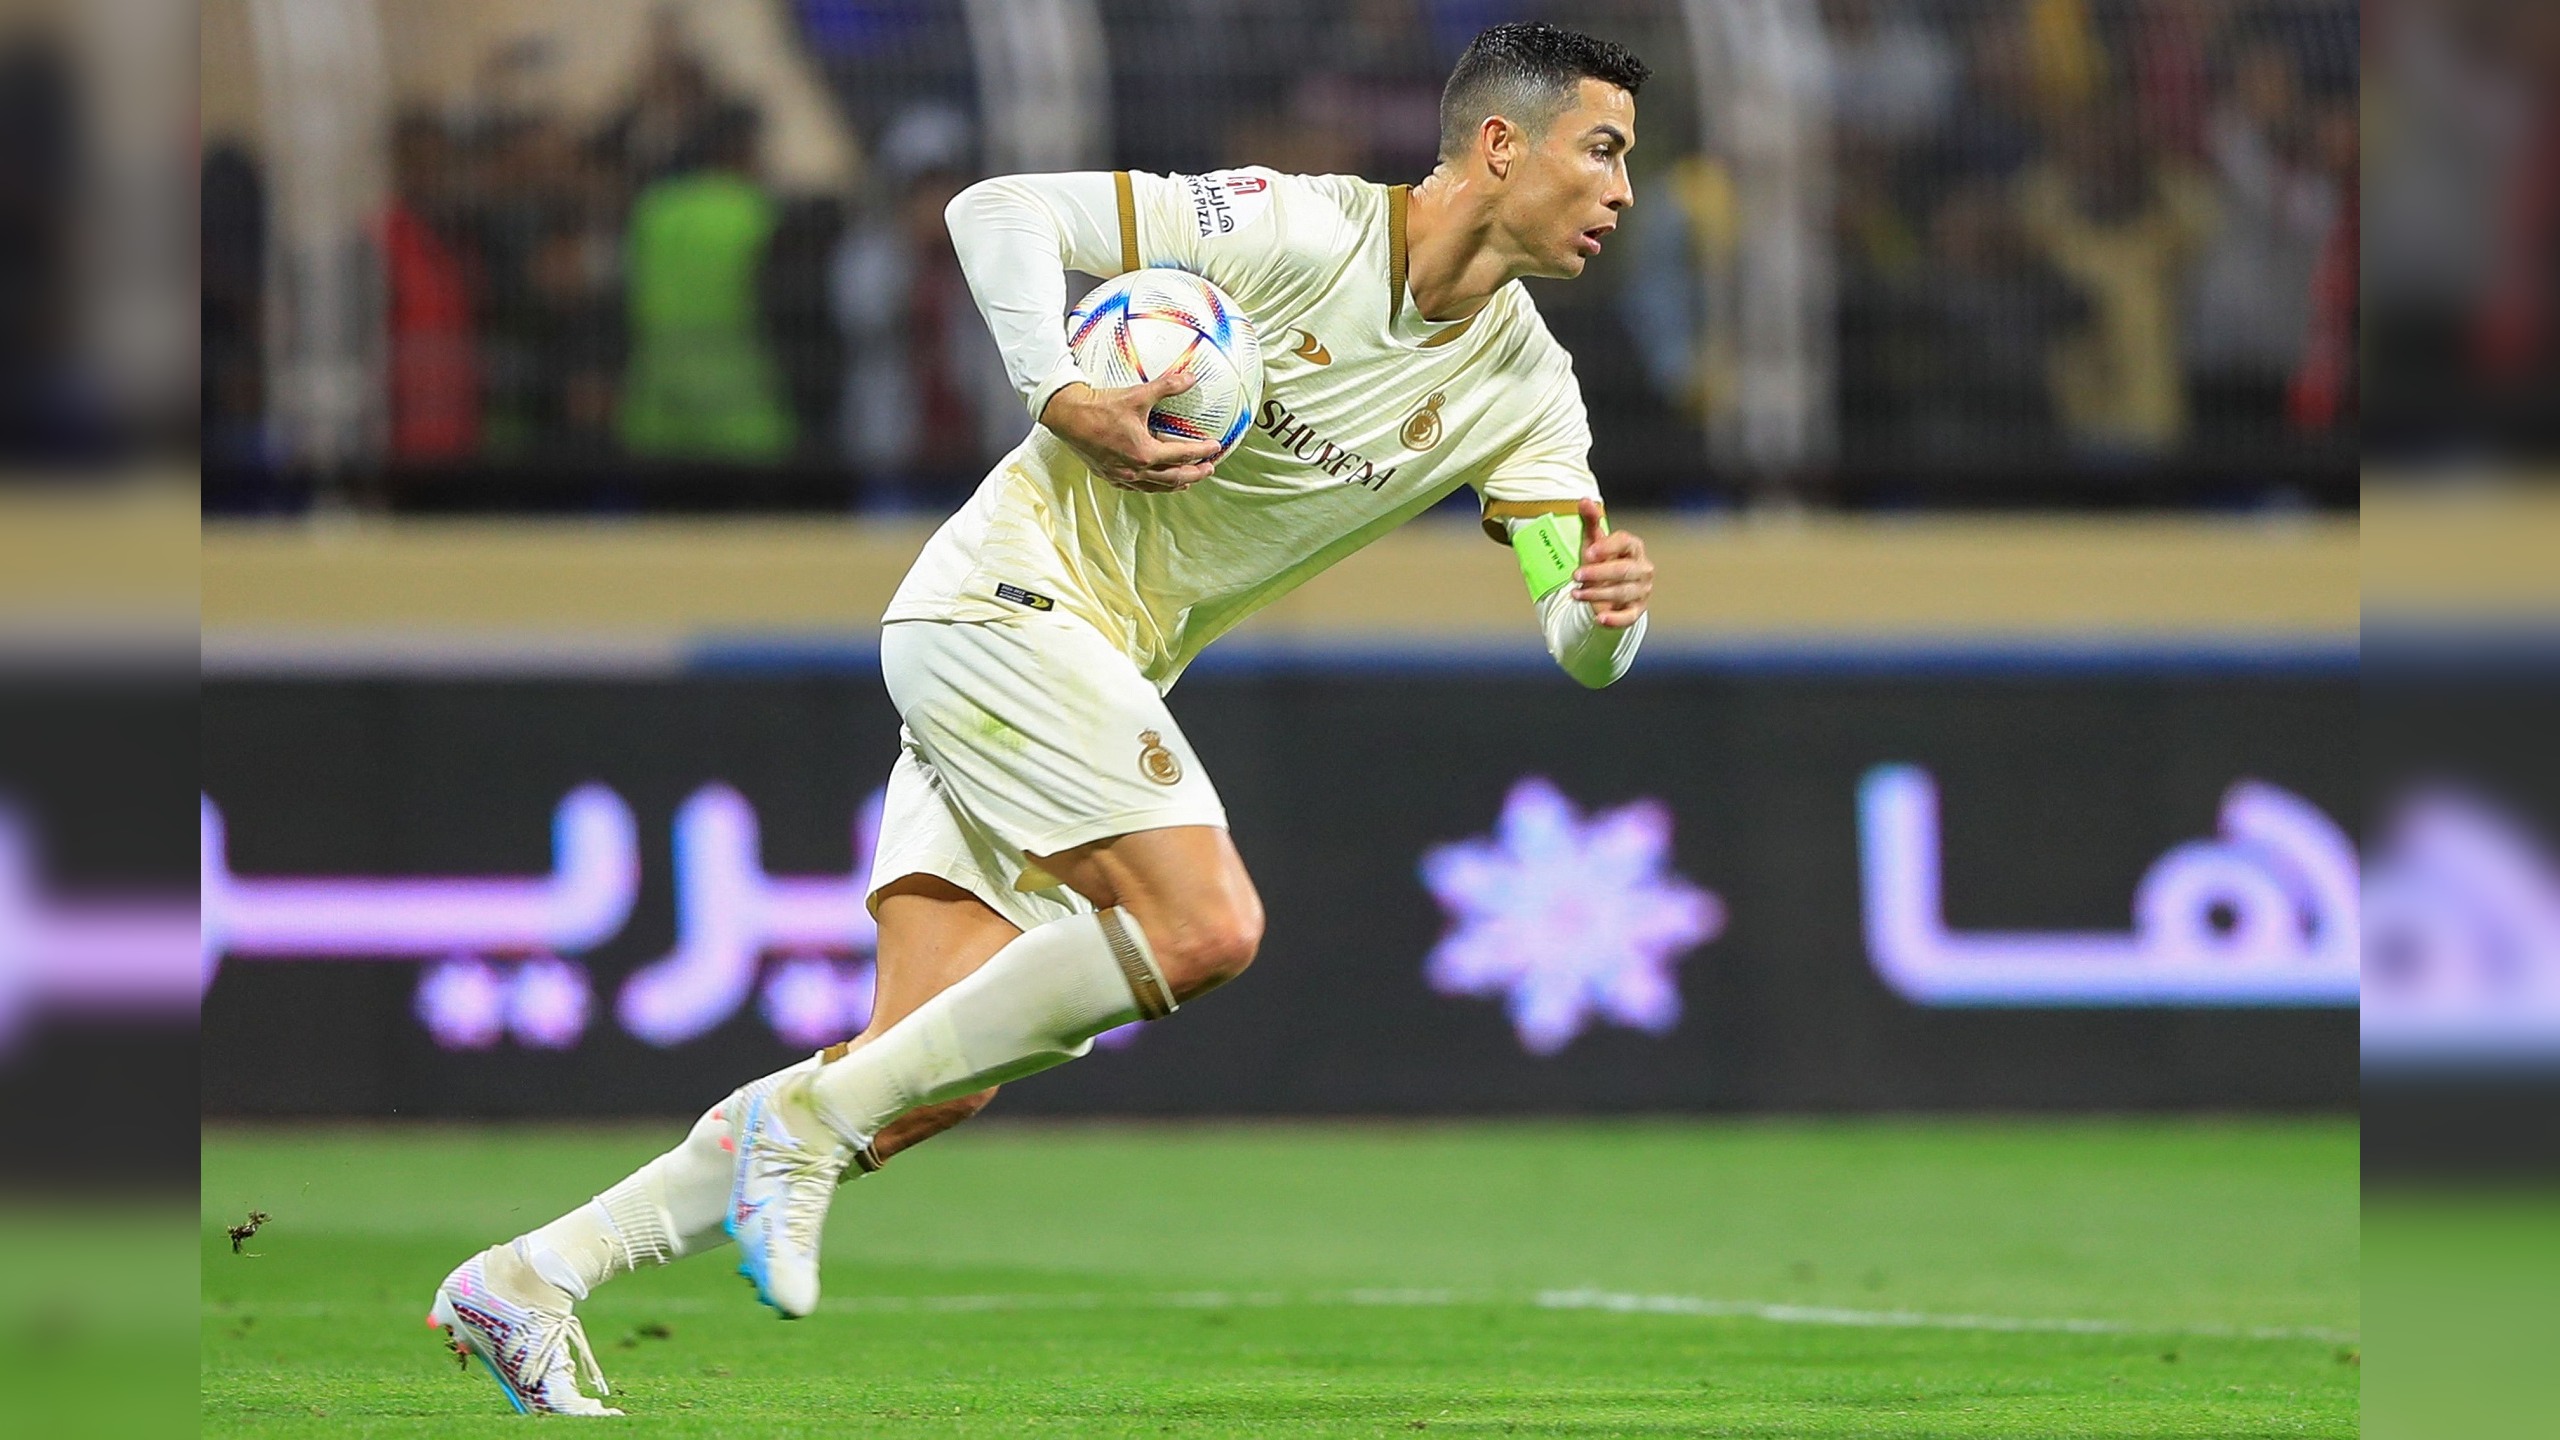 Jerusalem Ruminates Over Recruiting Ronaldo To Rally for Riyadh Relations